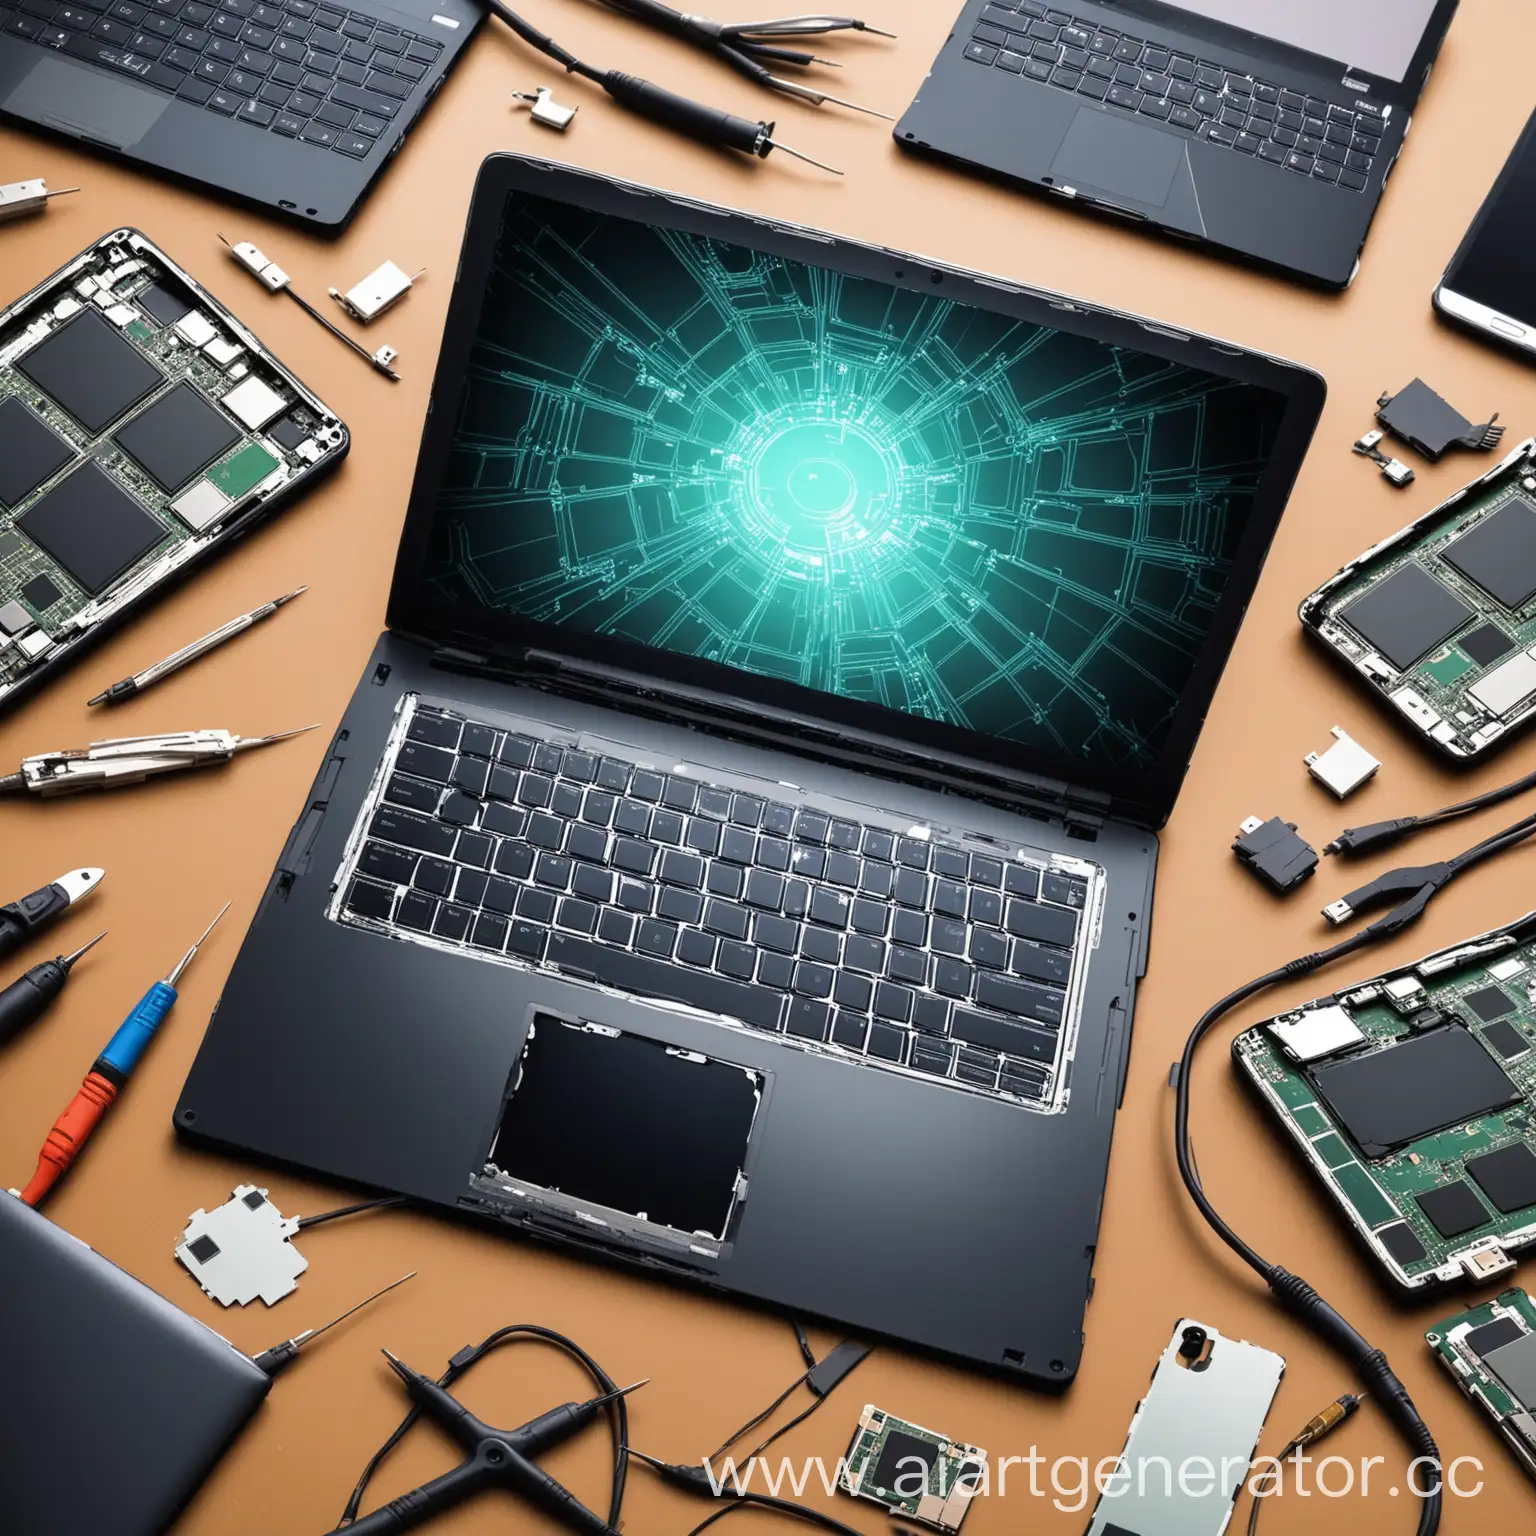 Professional-Laptop-and-Smartphone-Repair-Service